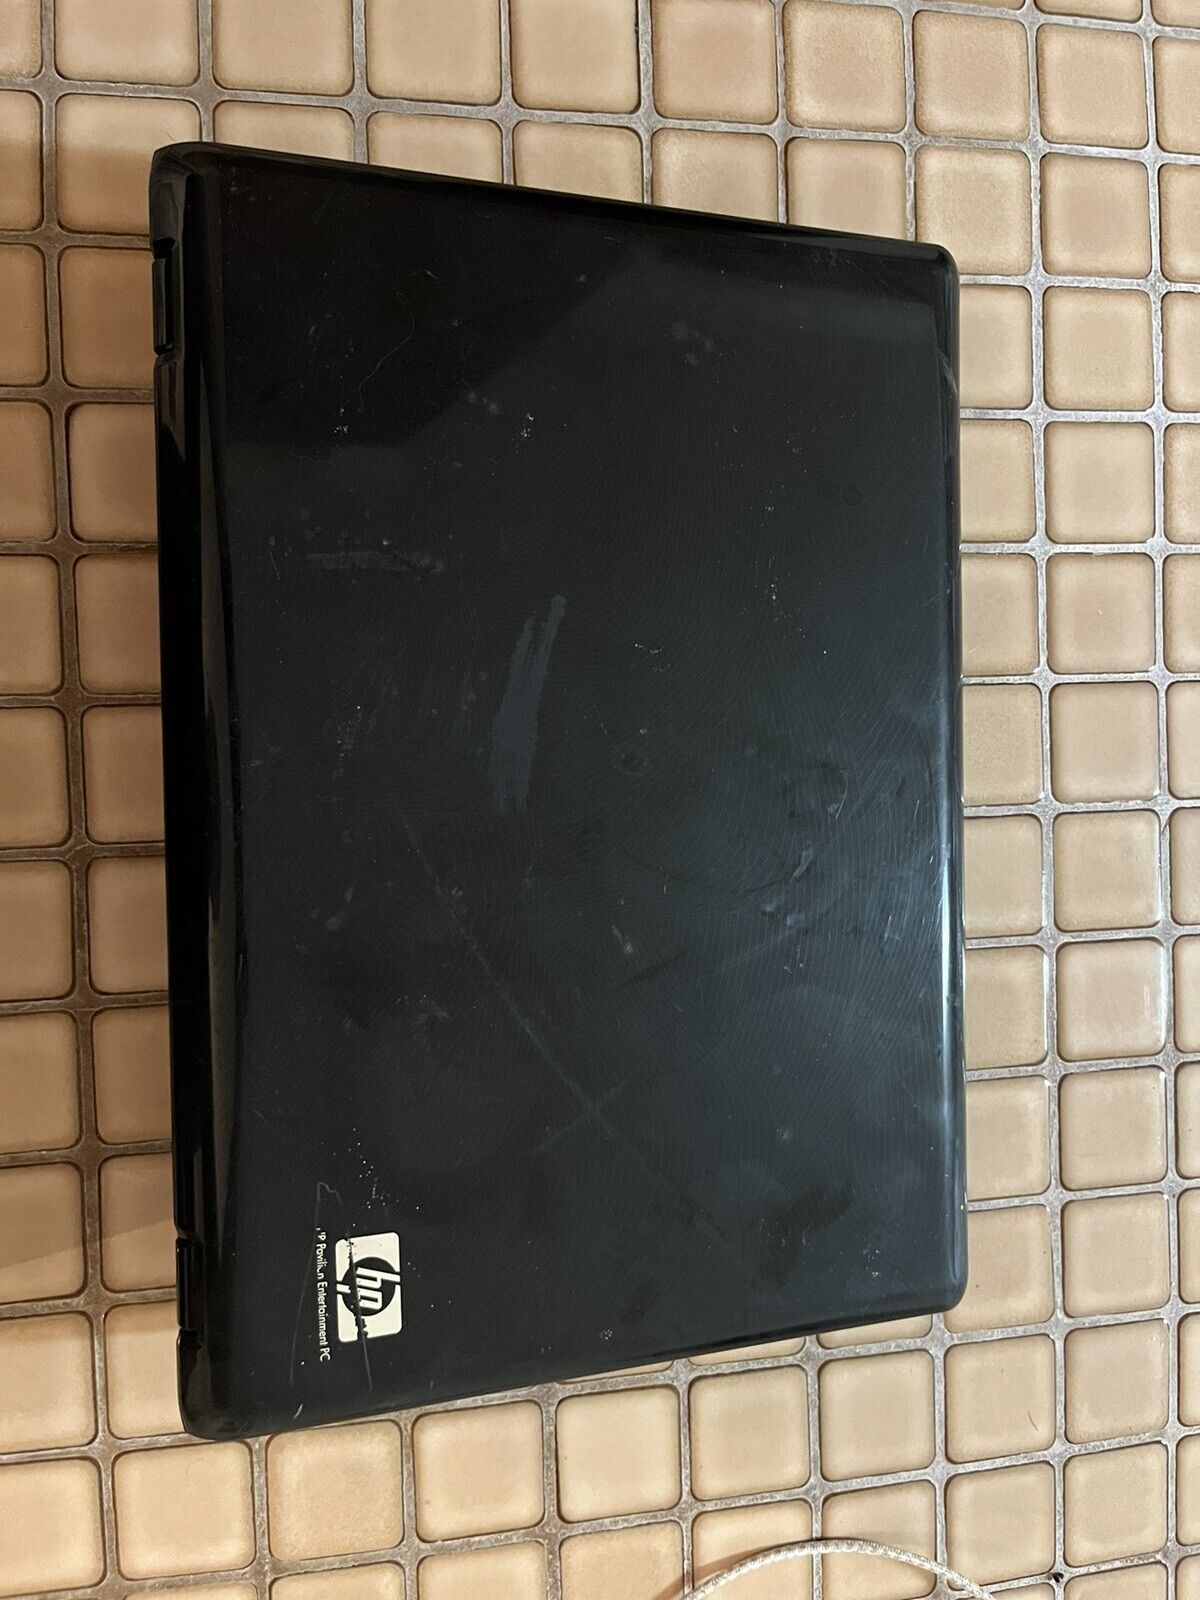 HP Pavilion dv6000 15.4in. Notebook/Laptop - Customized